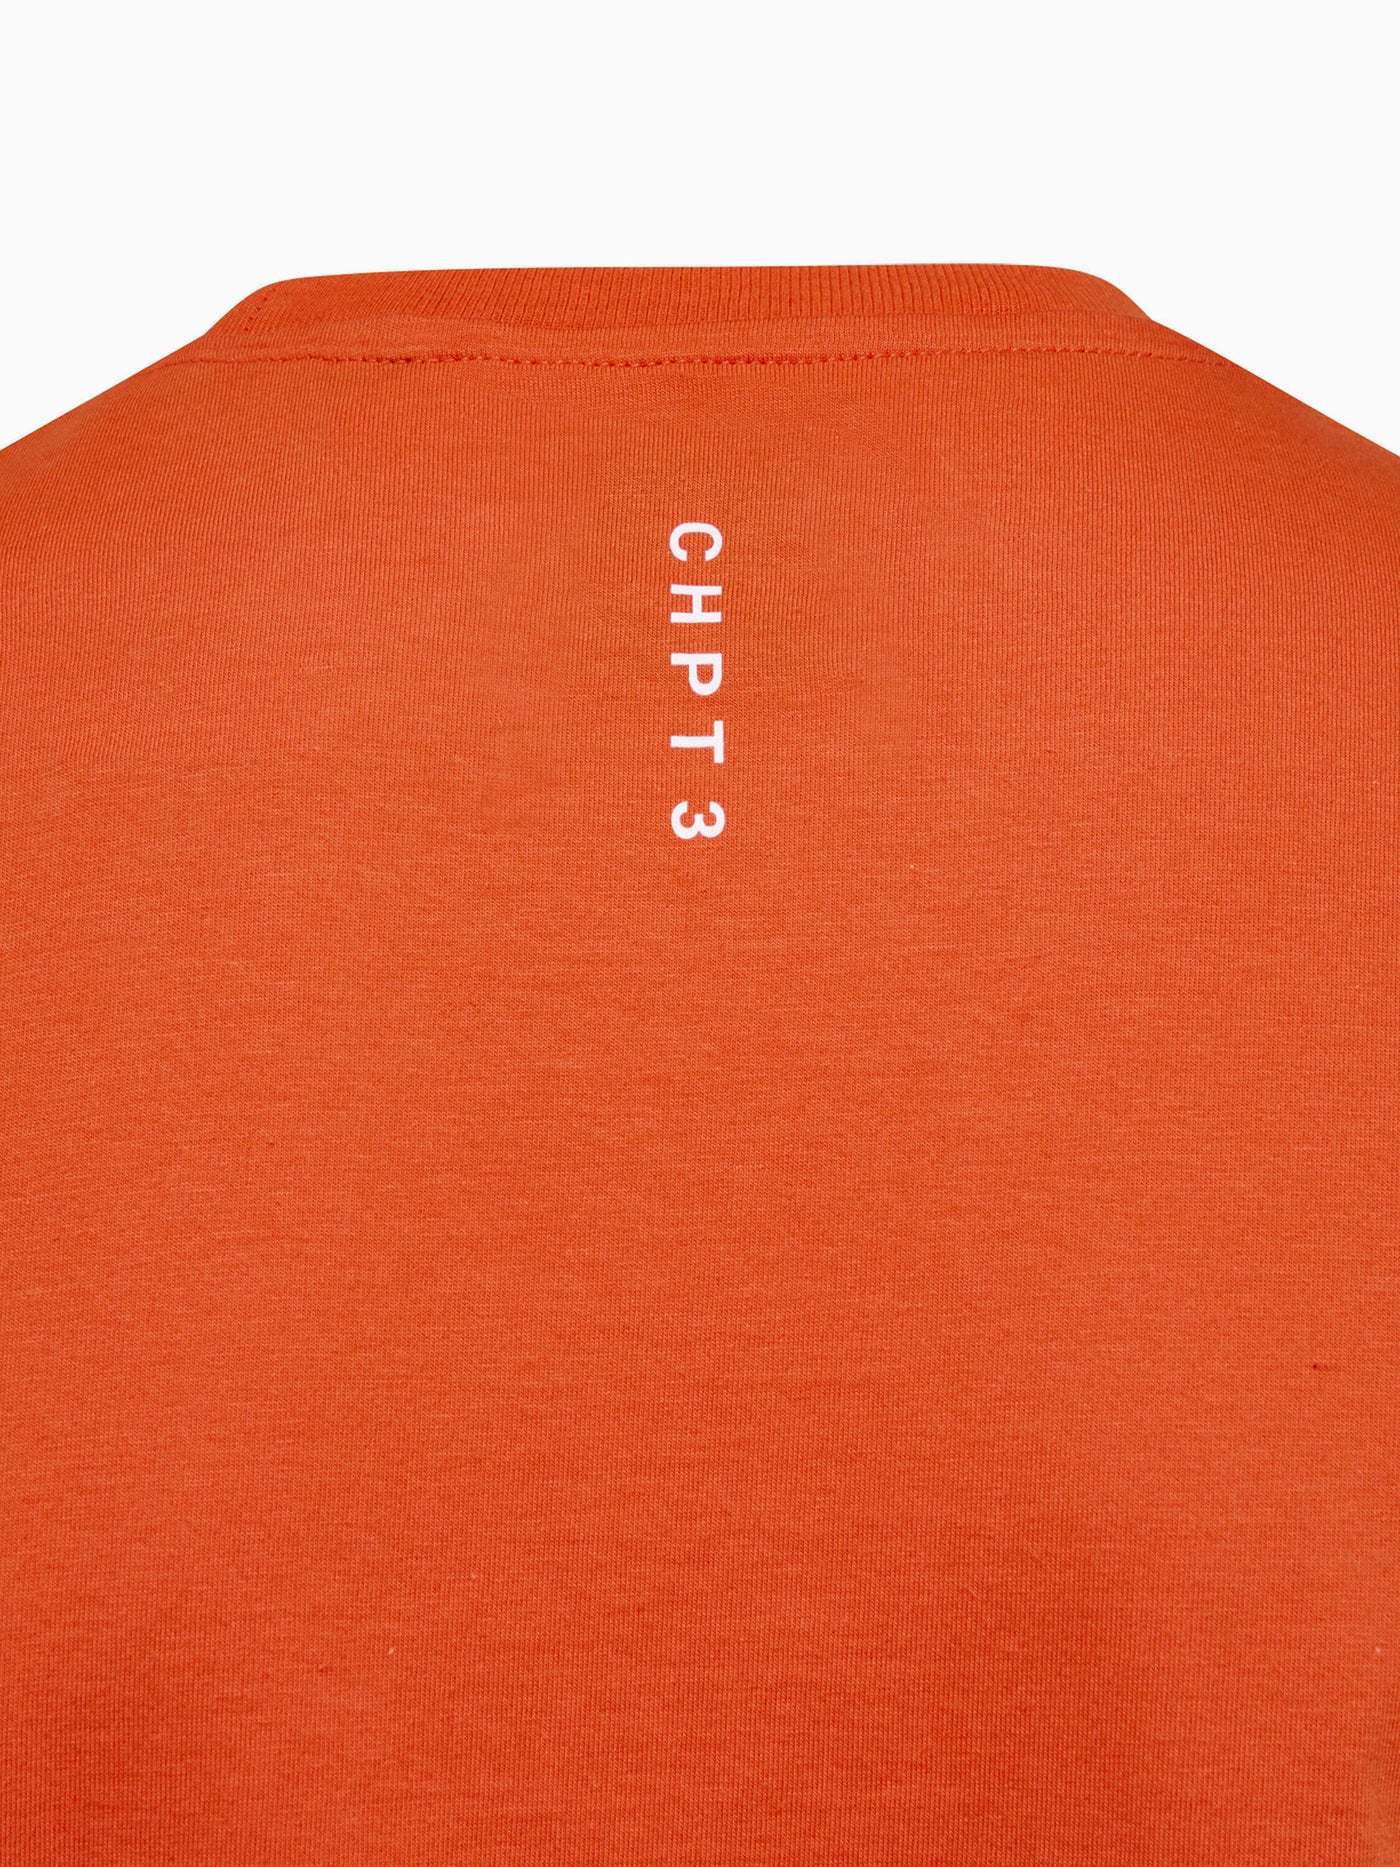 CHPT3 Elysée men's organic cotton t-shirt in colour Fire red, close up showing print detail #color_fire-red